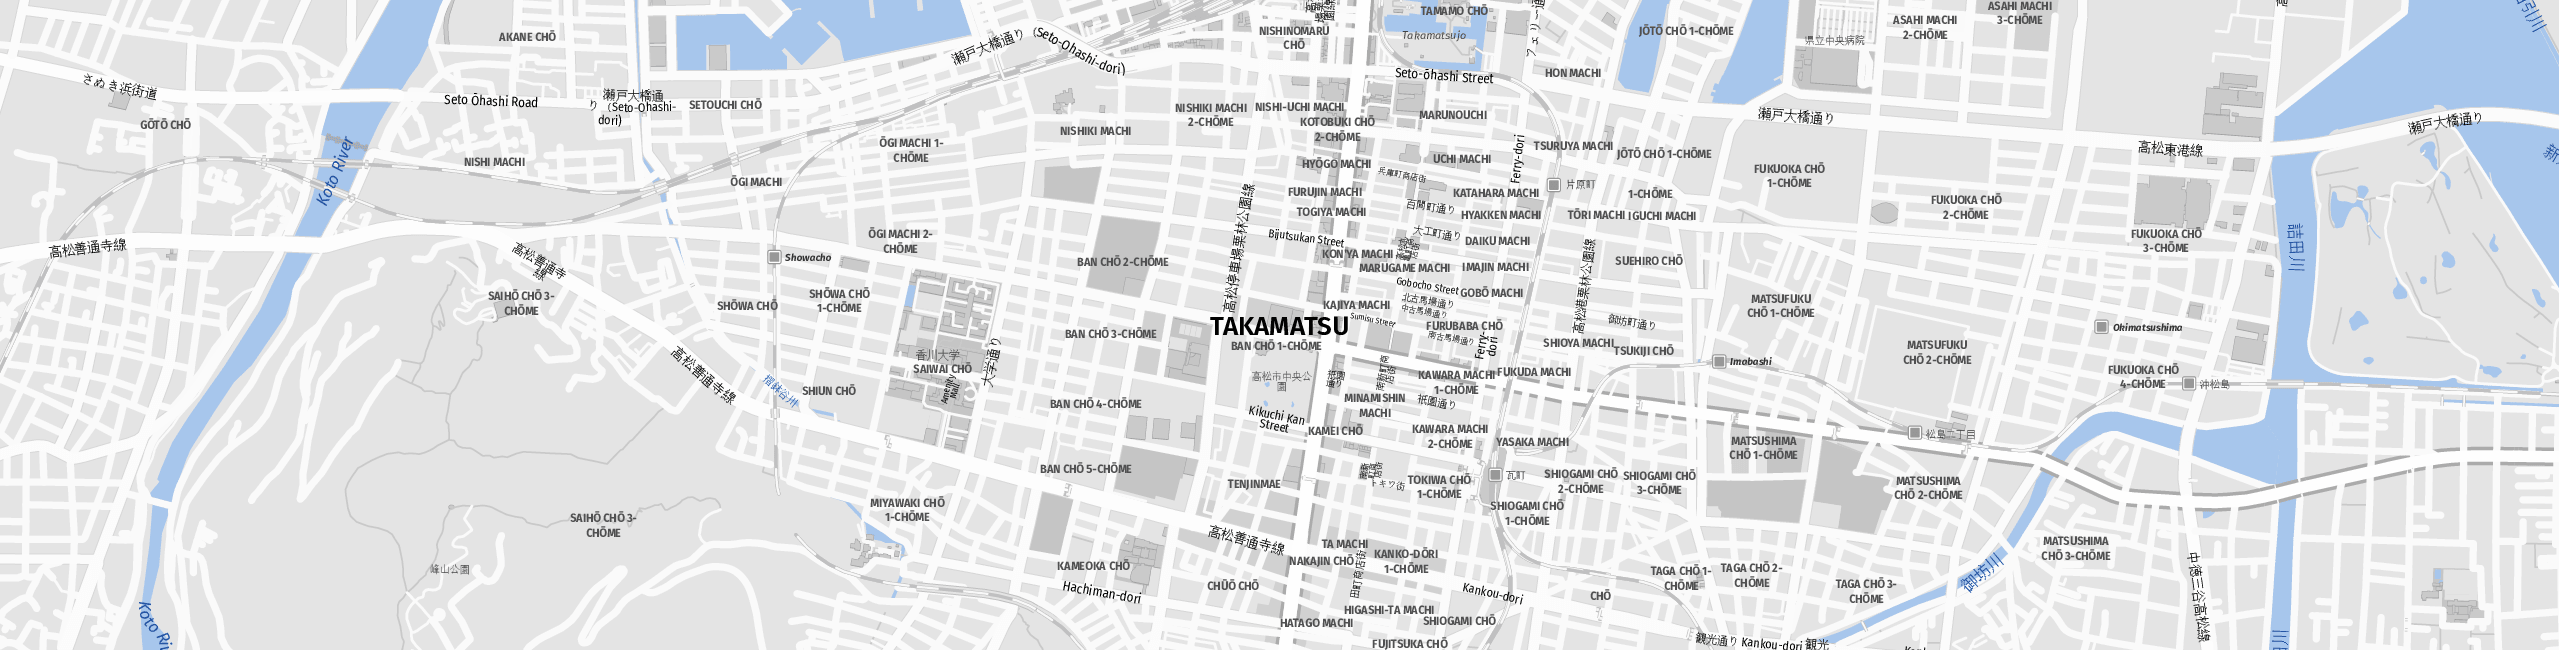 Stadtplan Takamatsu zum Downloaden.